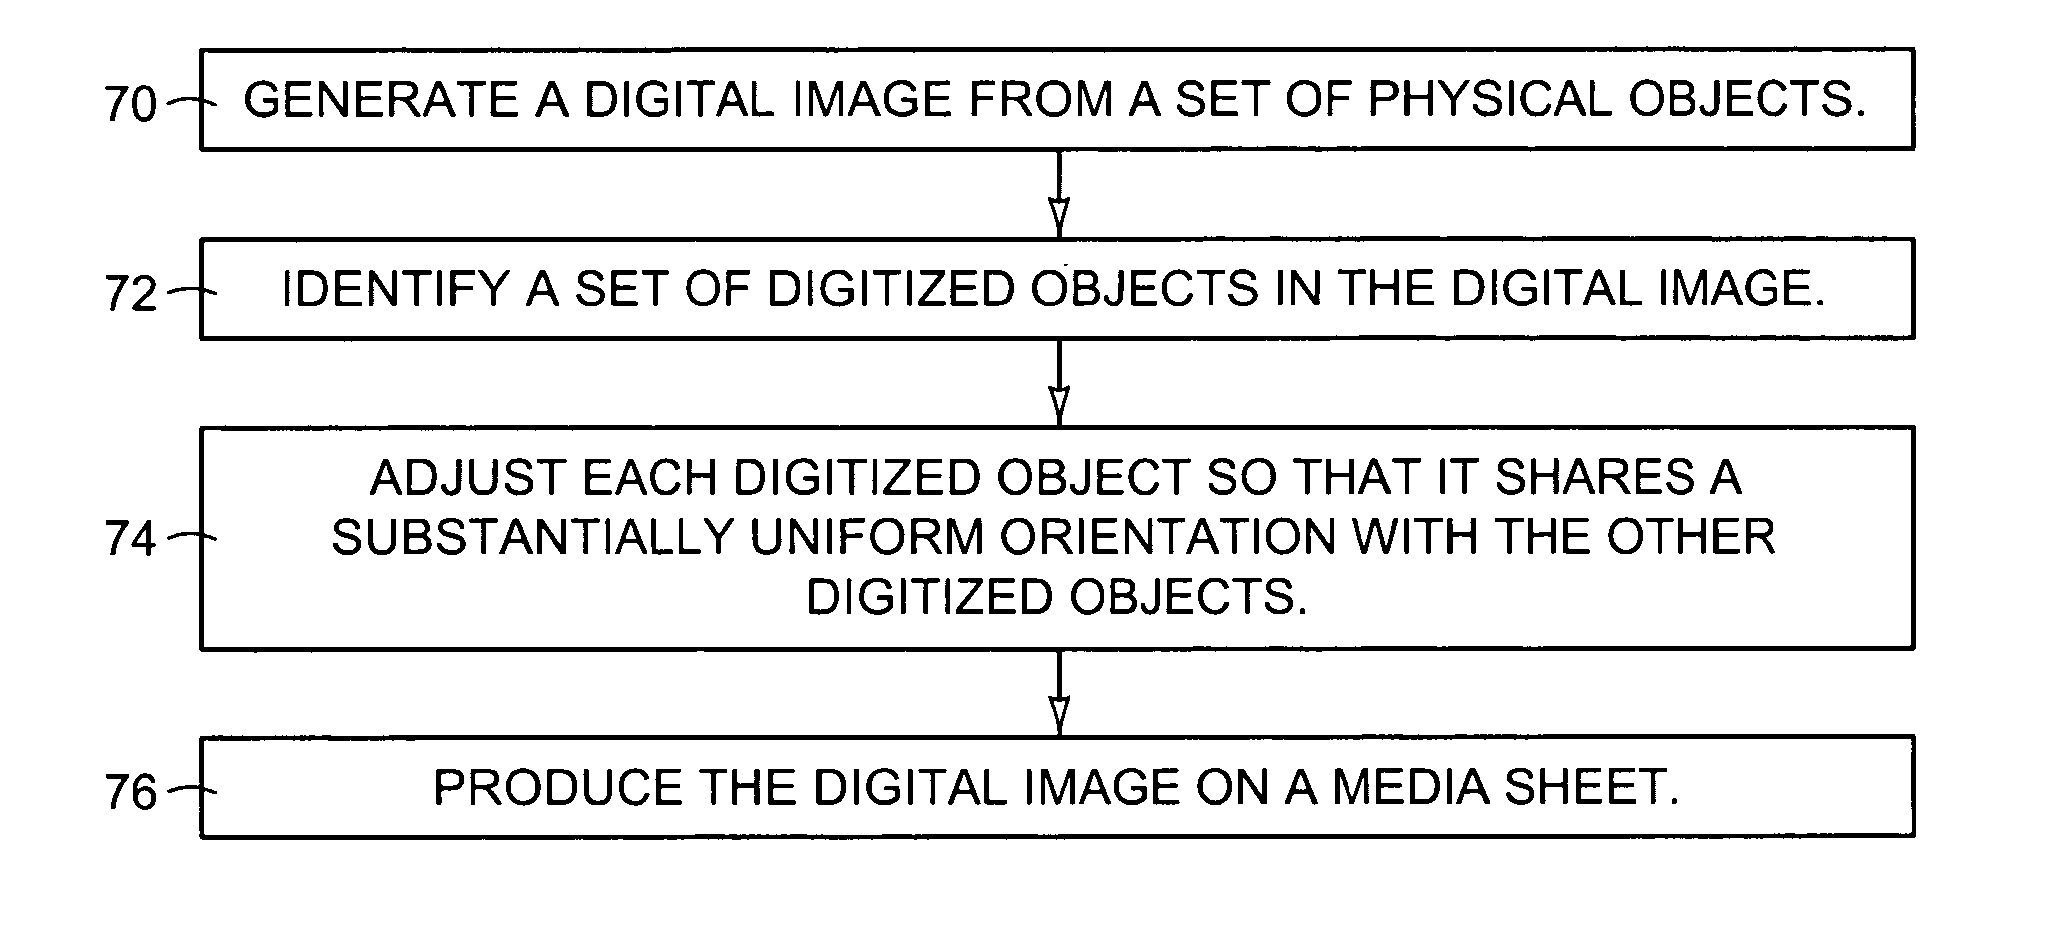 Organizing a digital image